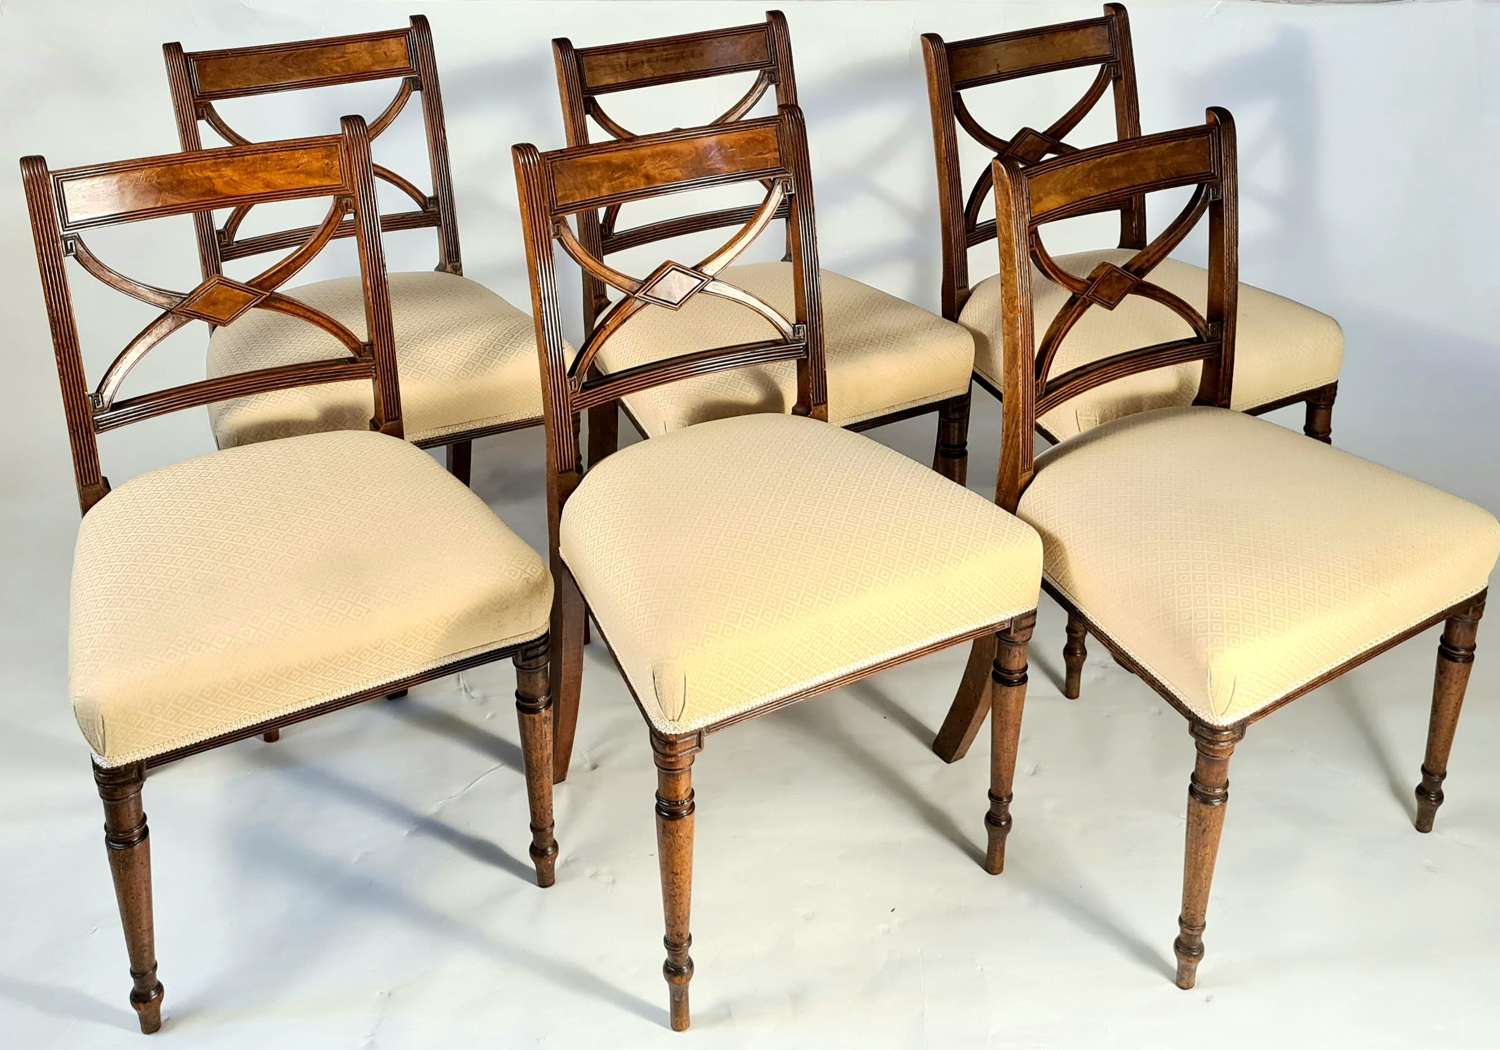 A Set of 6 Sheraton Mahogany Dining Chairs